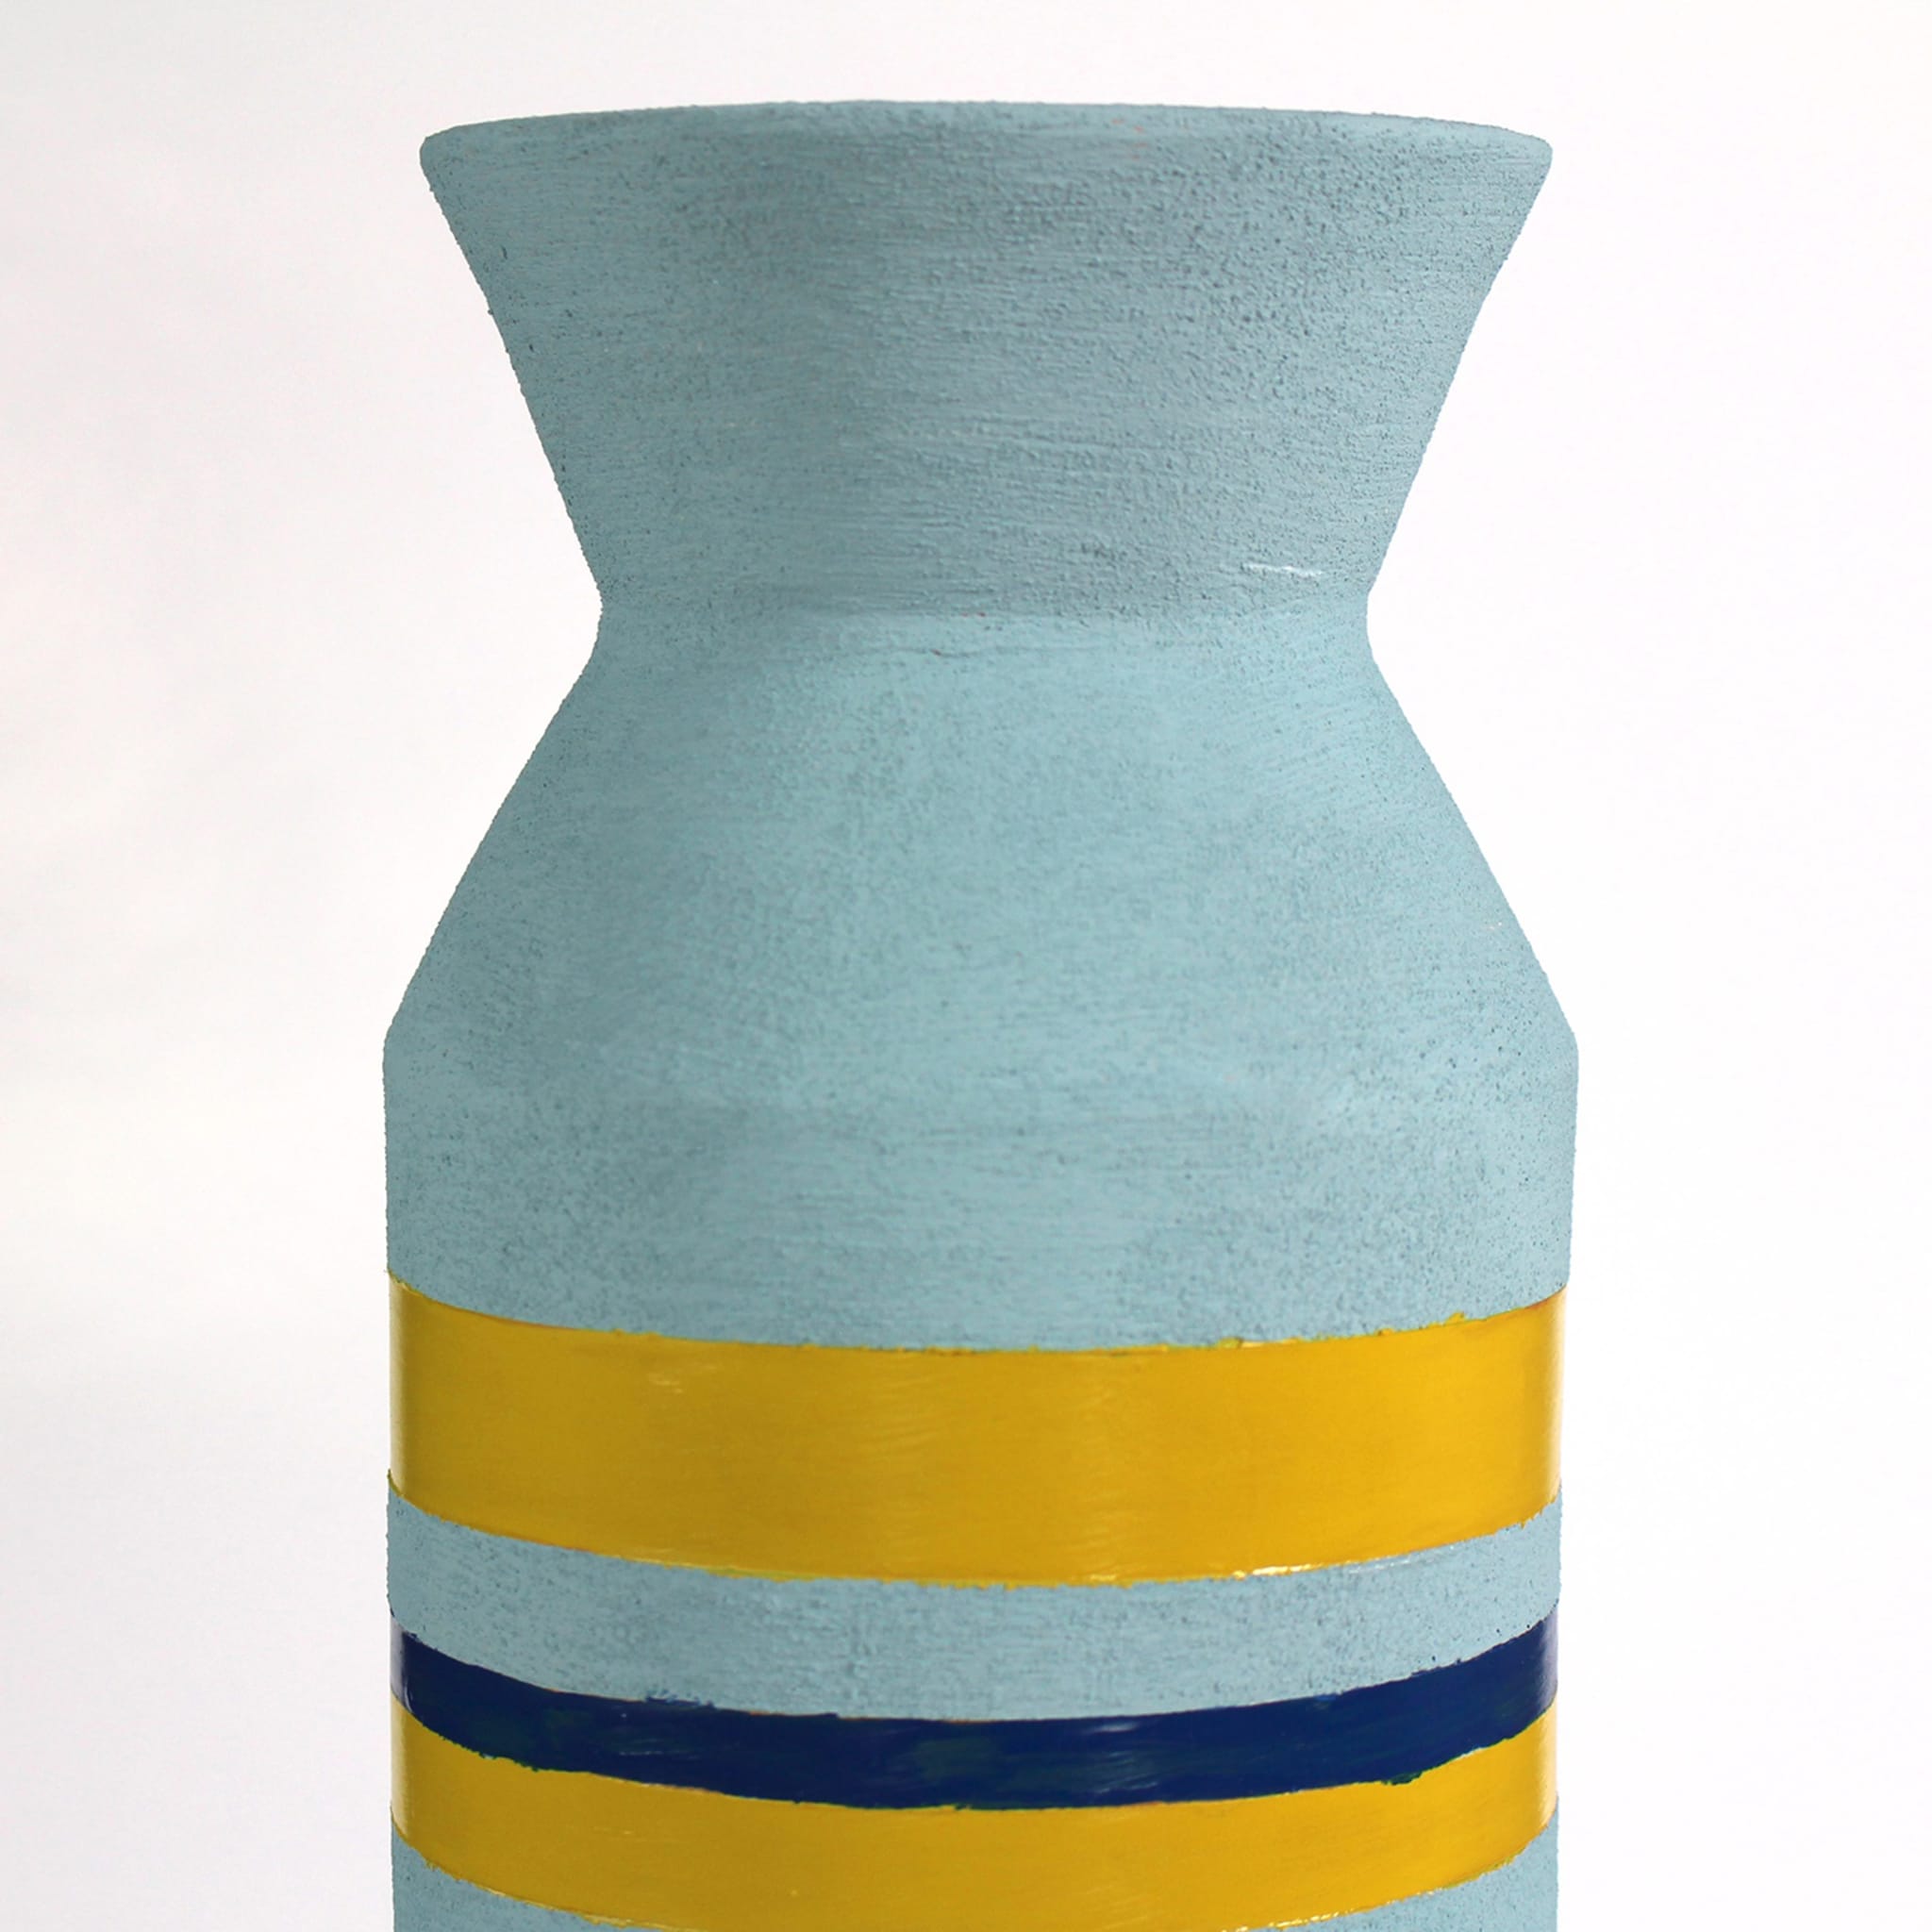 Polychrome Vase 9 by Mascia Meccani - Alternative view 1